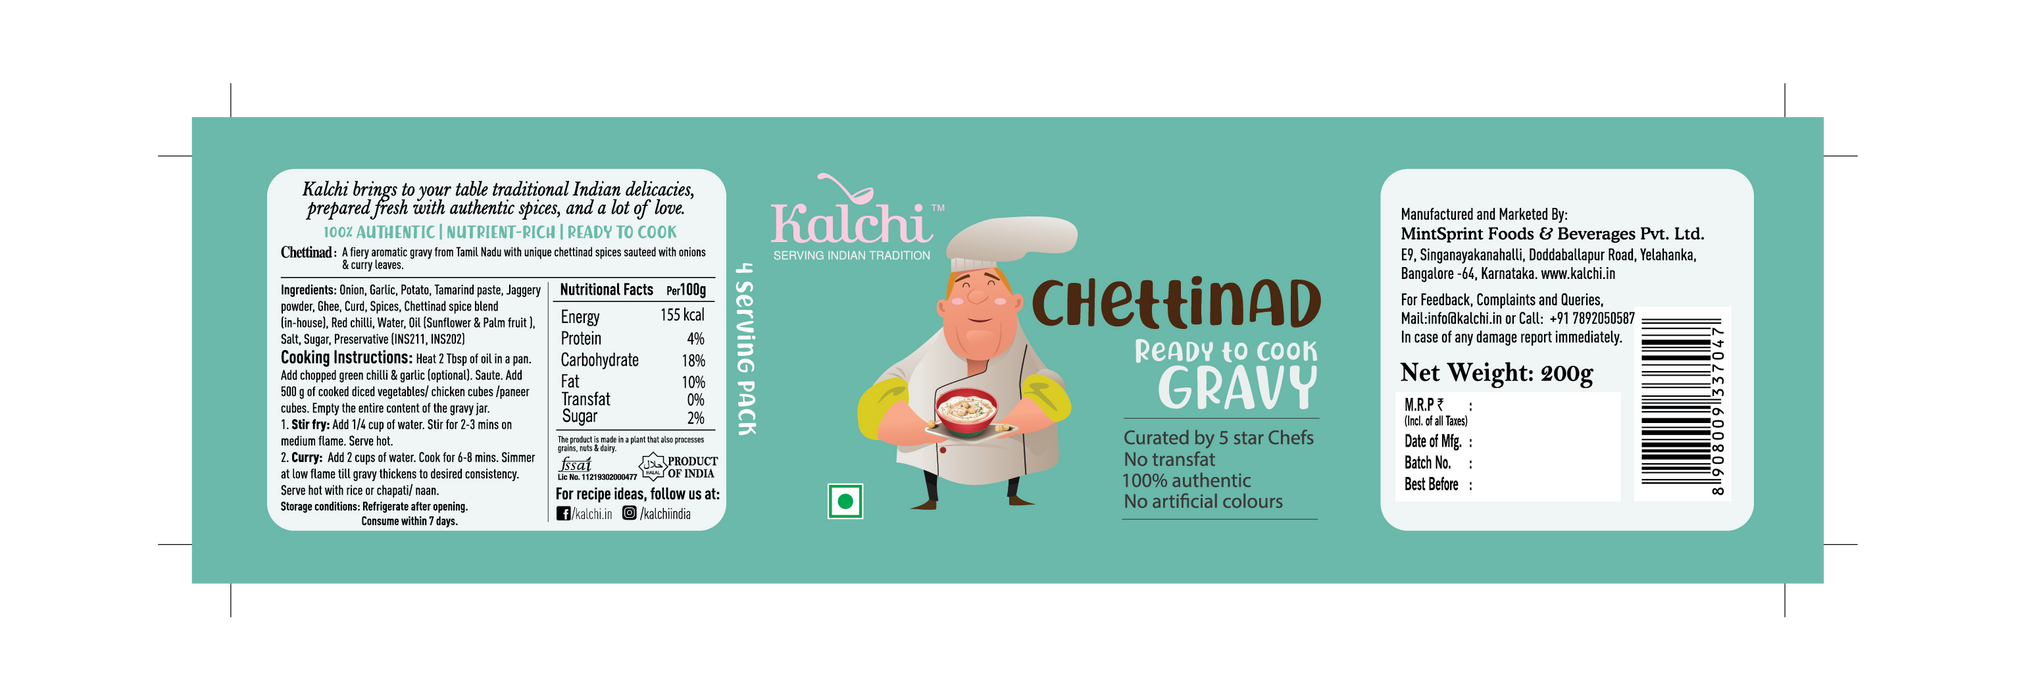 Chettinad Gravy - Local Option